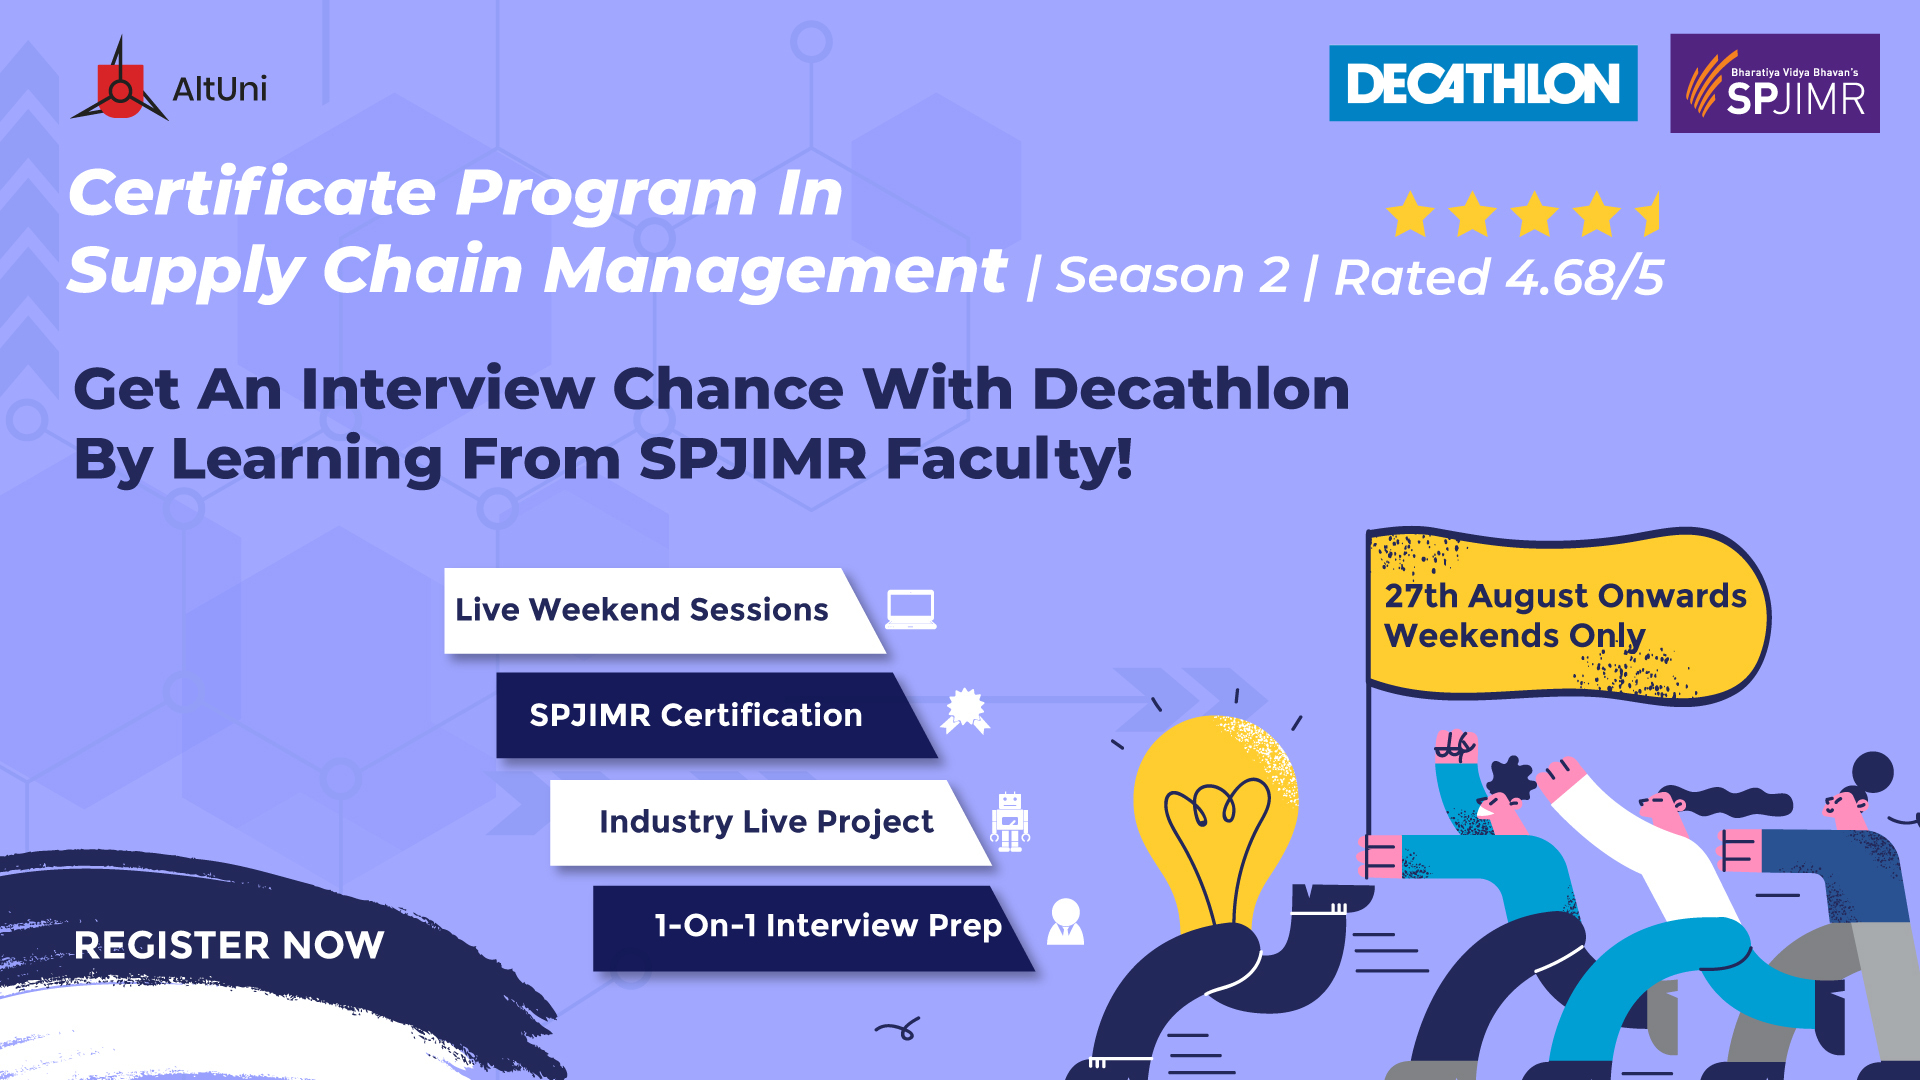 Certificate Program in Supply Chain Management with SPJIMR & Decathlon